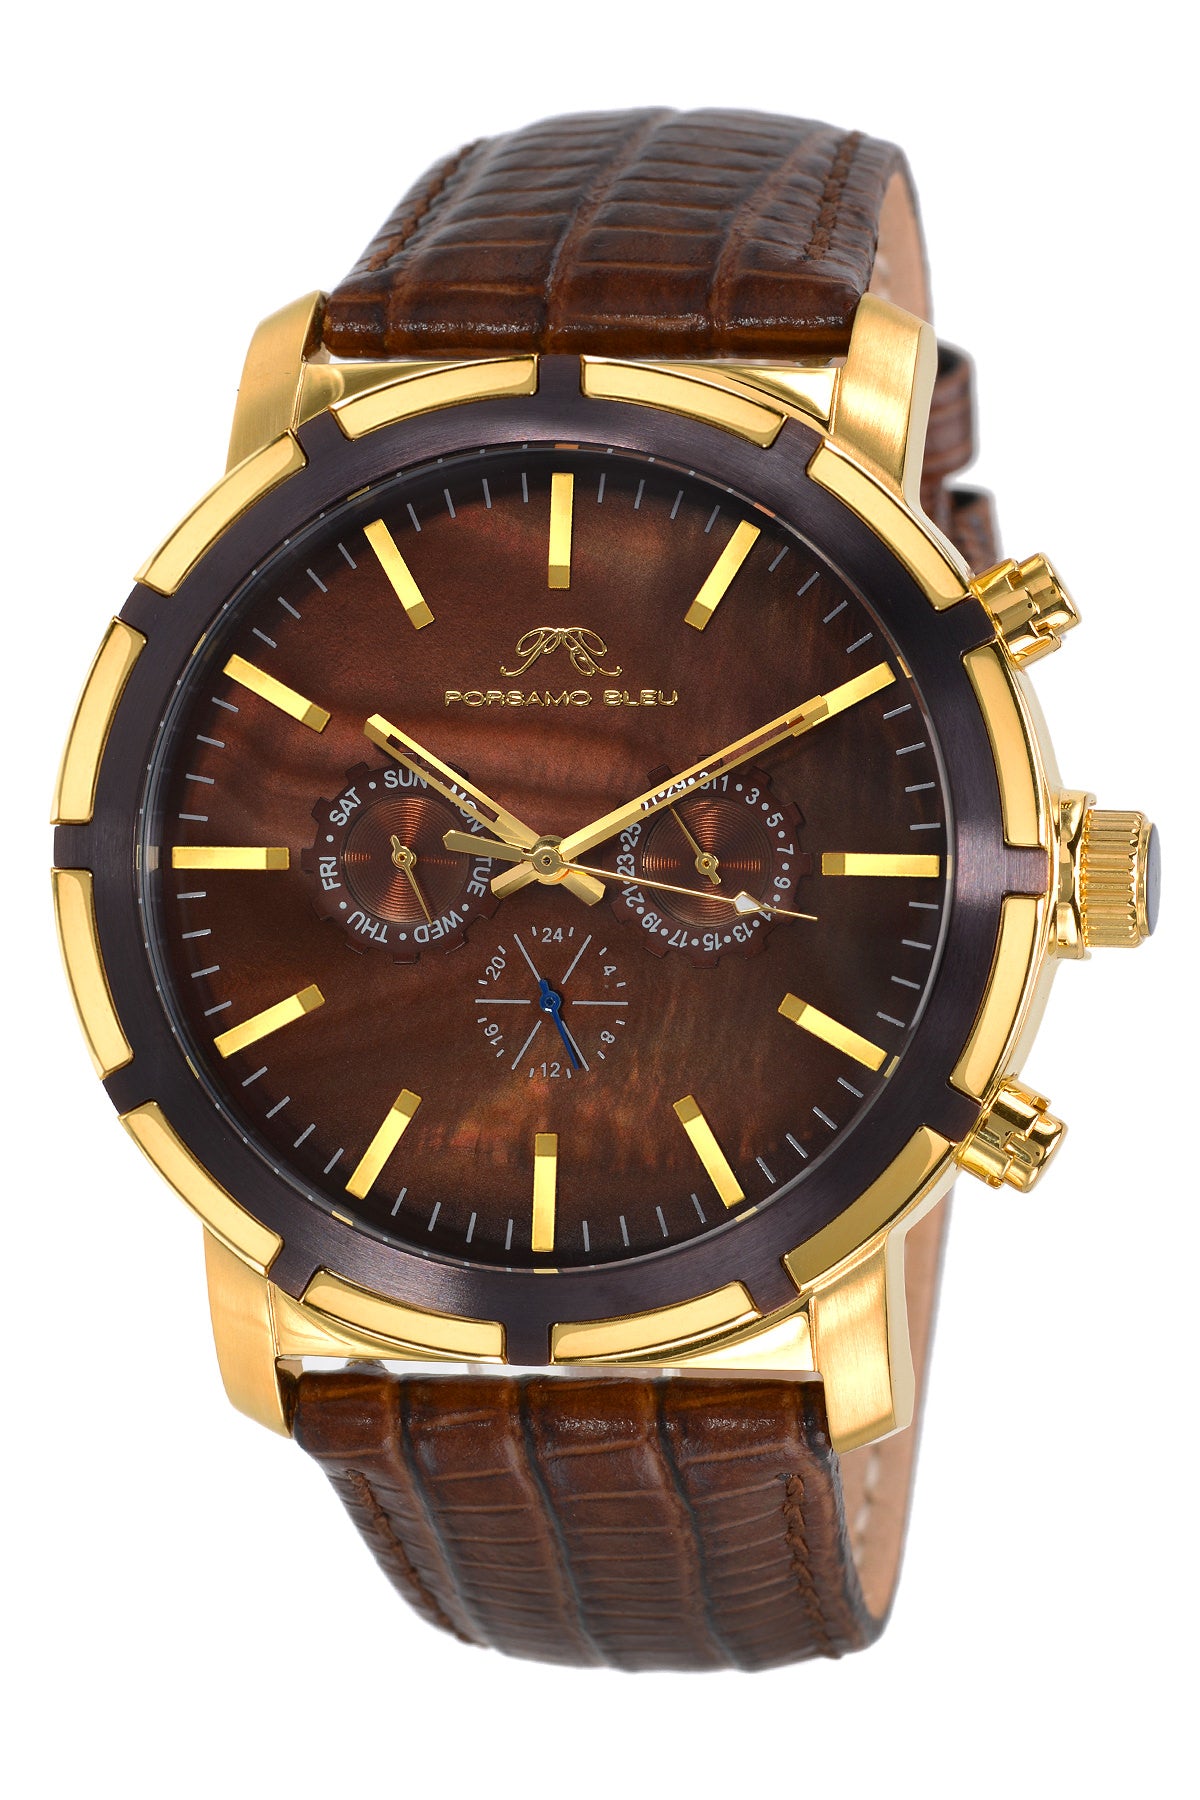 Porsamo Bleu NYC luxury men's watch, genuine leather band, gold, brown 051CNYL